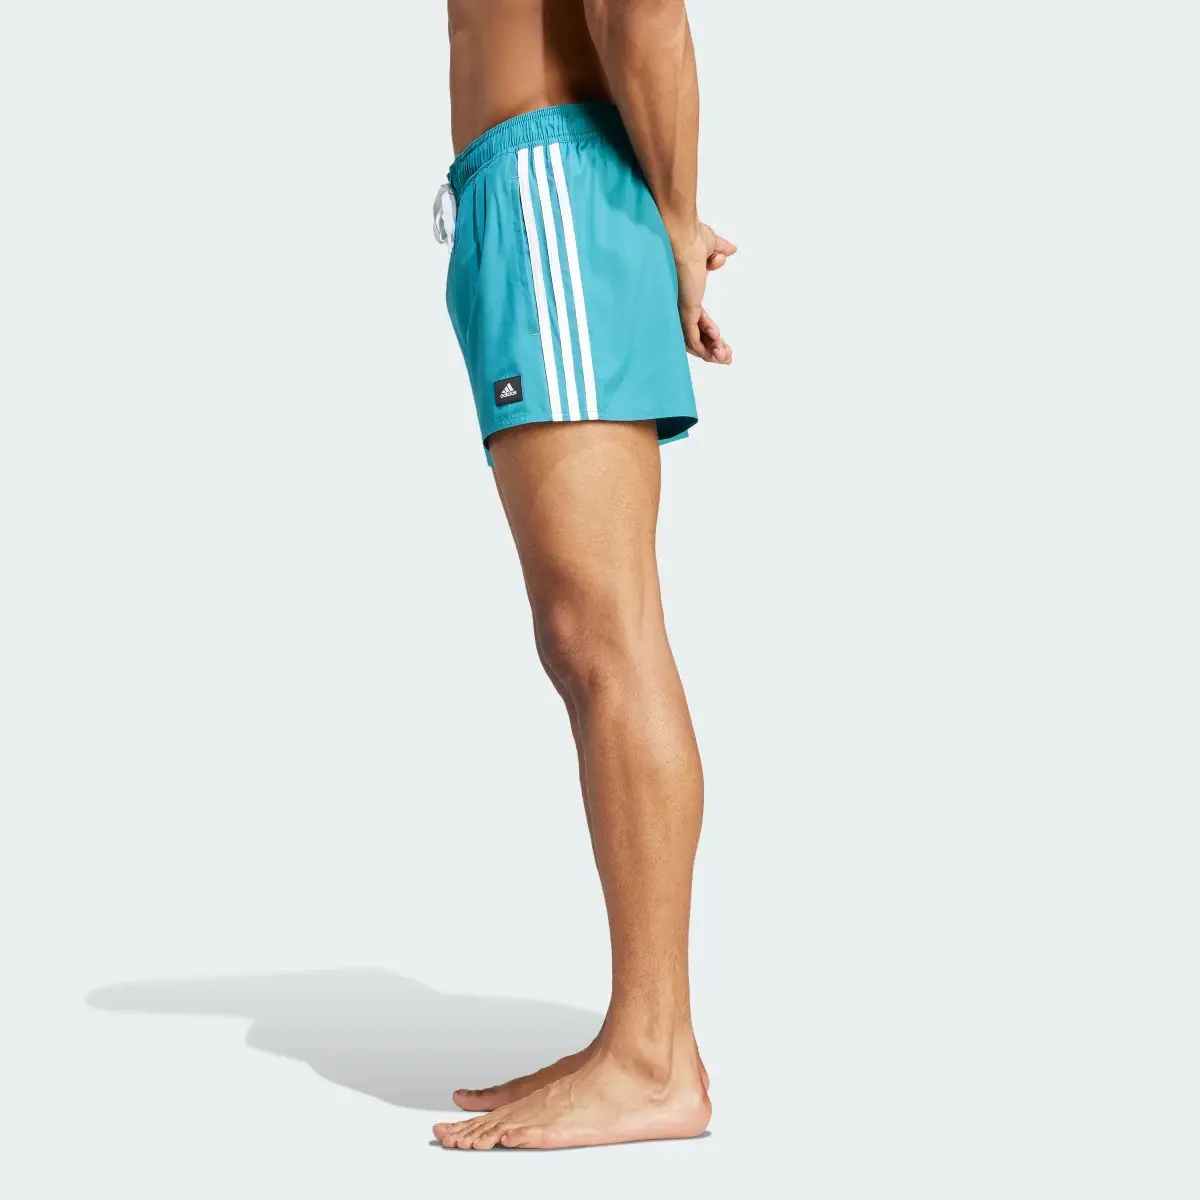 Adidas 3-Stripes CLX Very-Short-Length Swim Shorts. 2